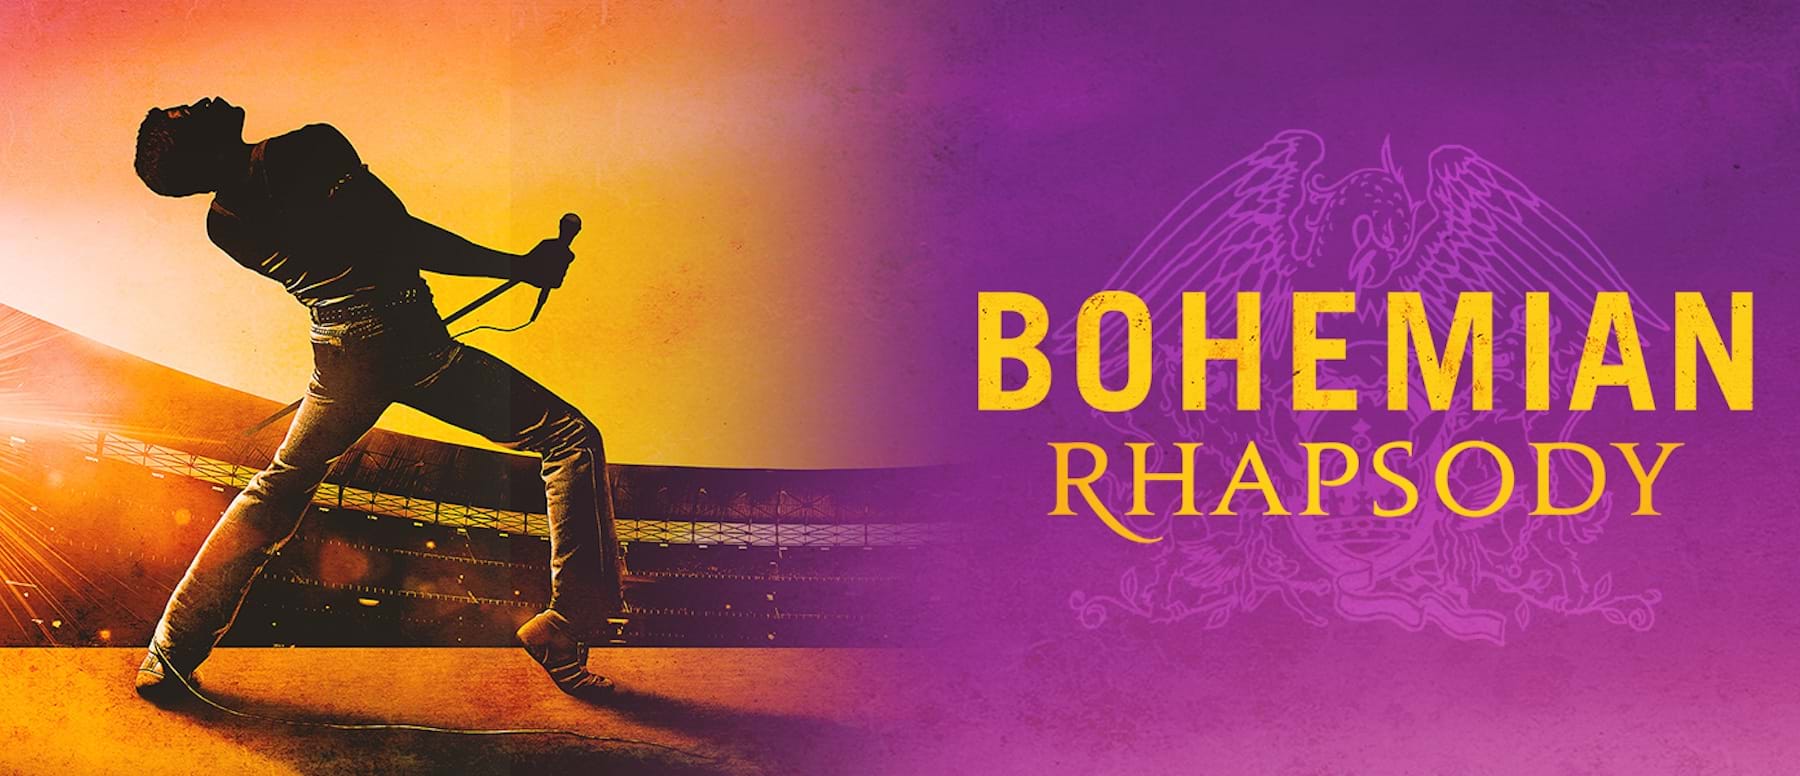 Bohemian-Rhapsody by darshali soni.jpg